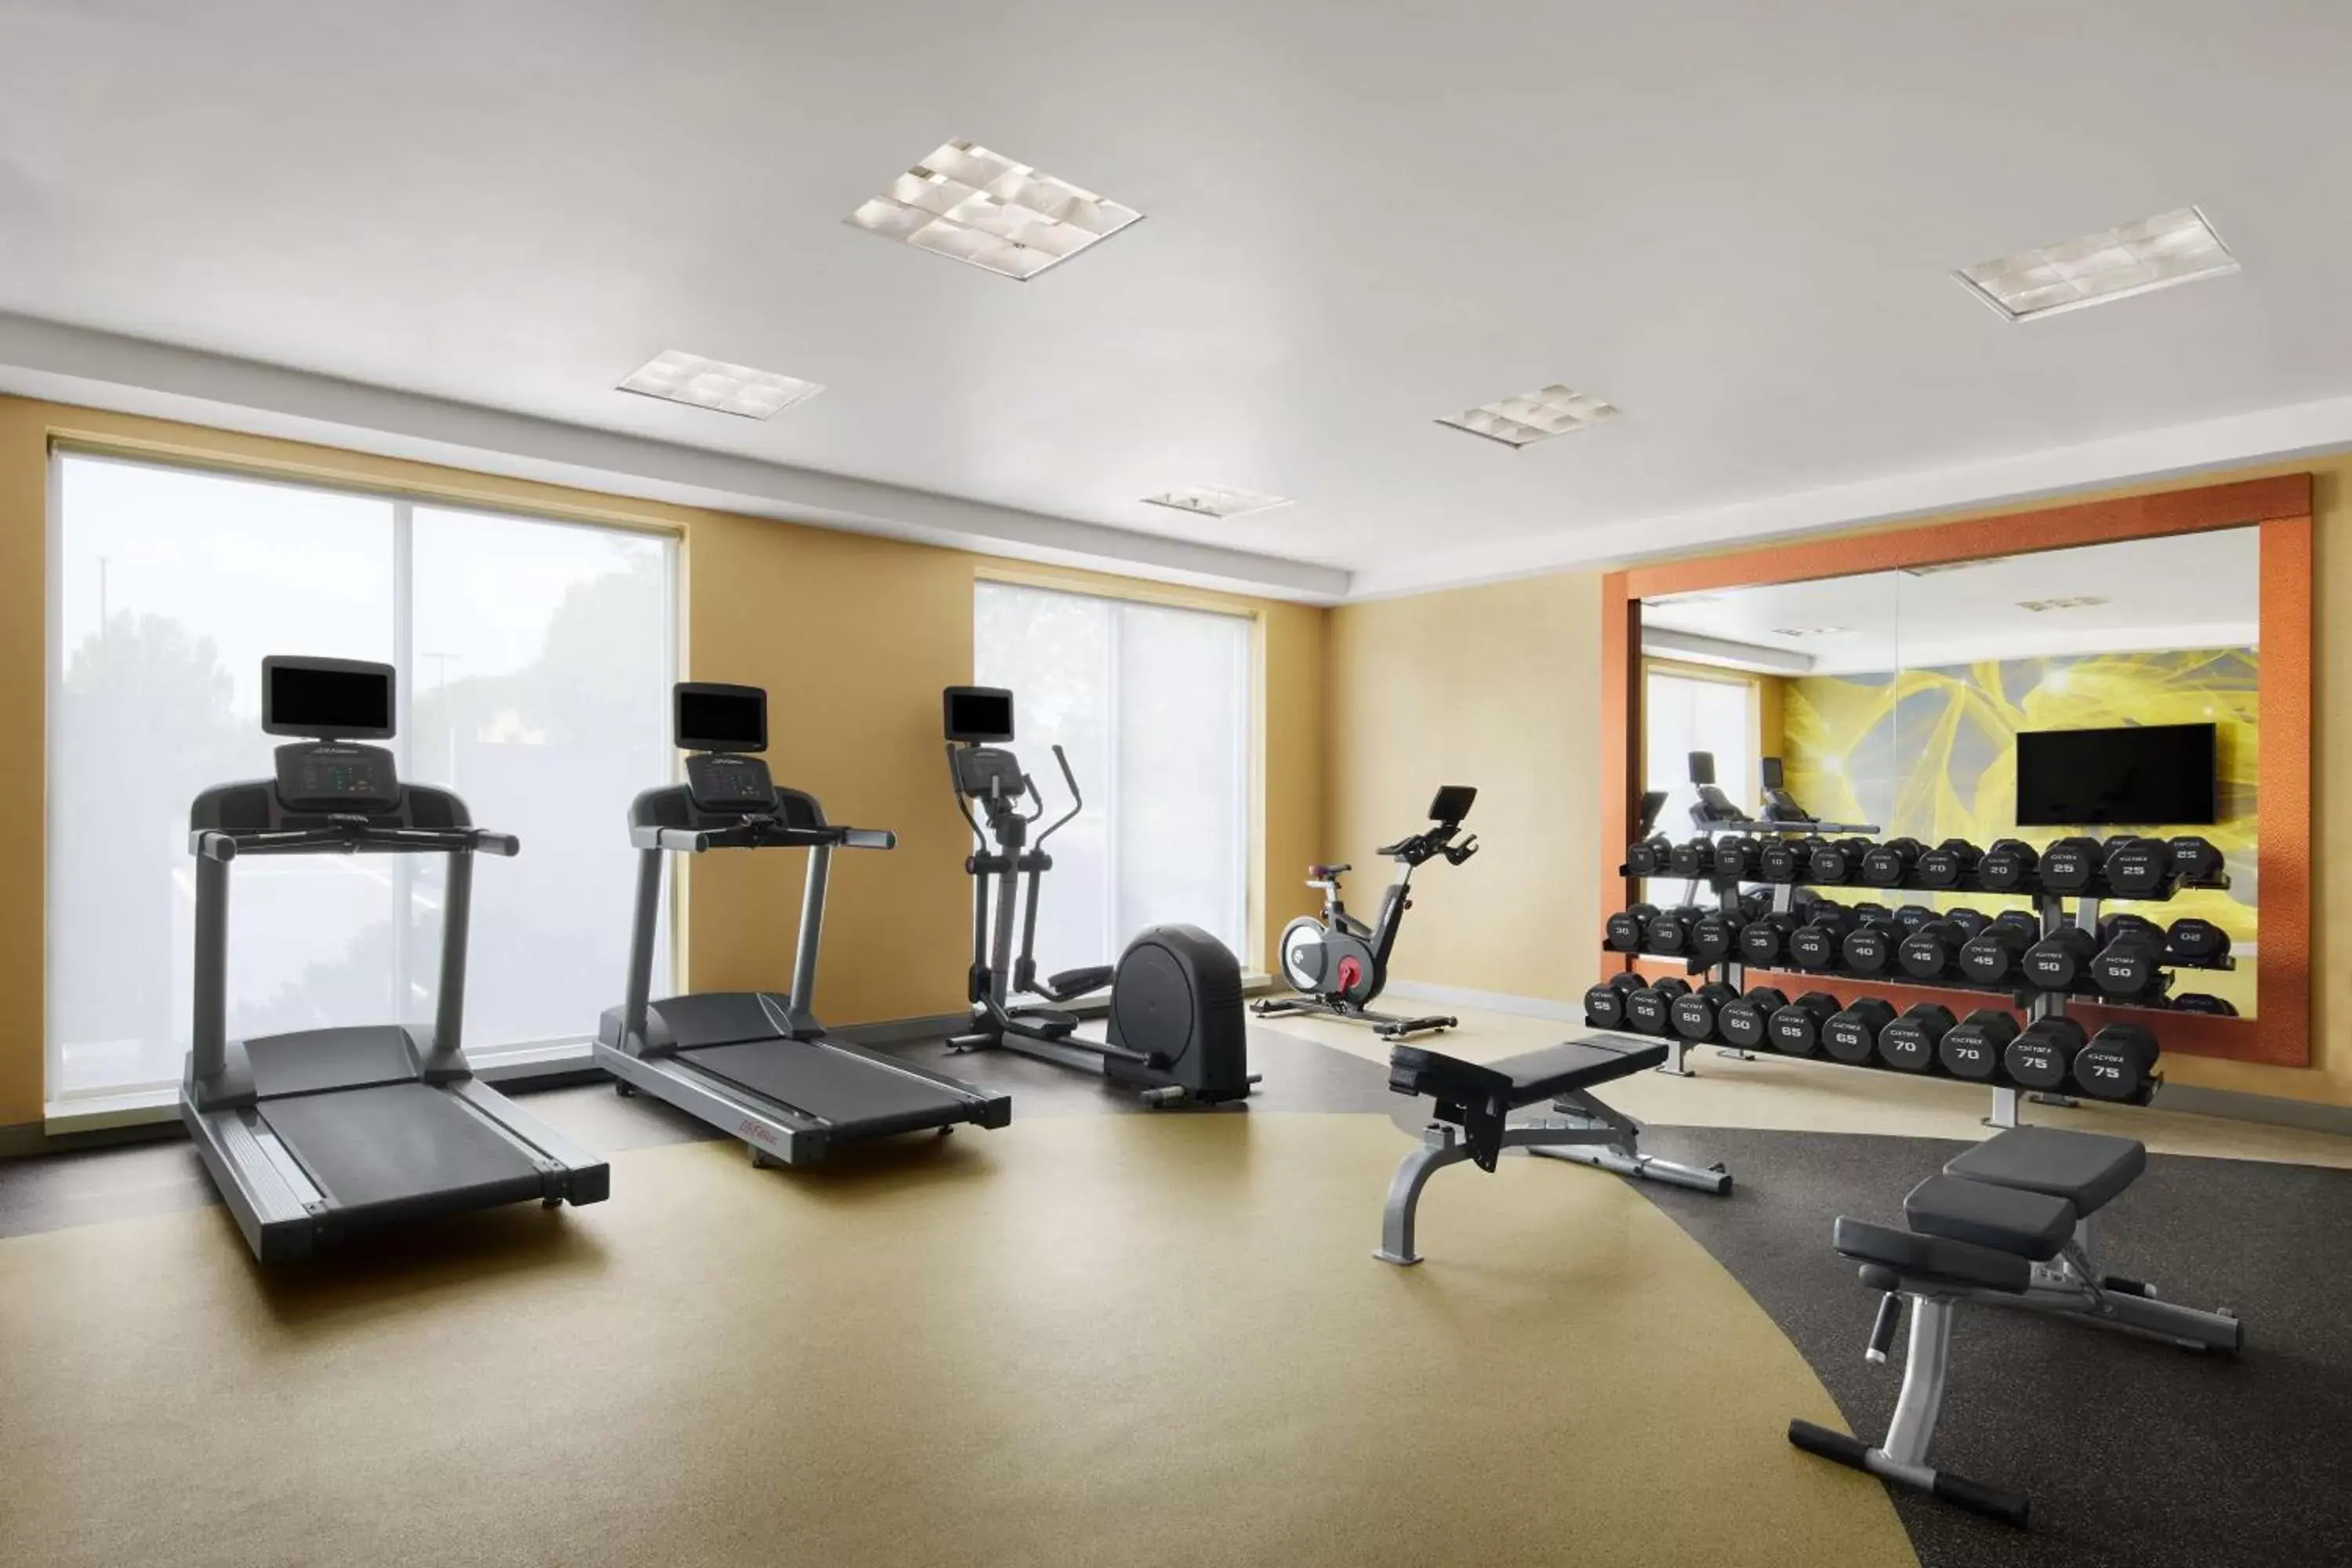 Fitness centre/facilities, Fitness Center/Facilities in Hilton Garden Inn Denver South Park Meadows Area